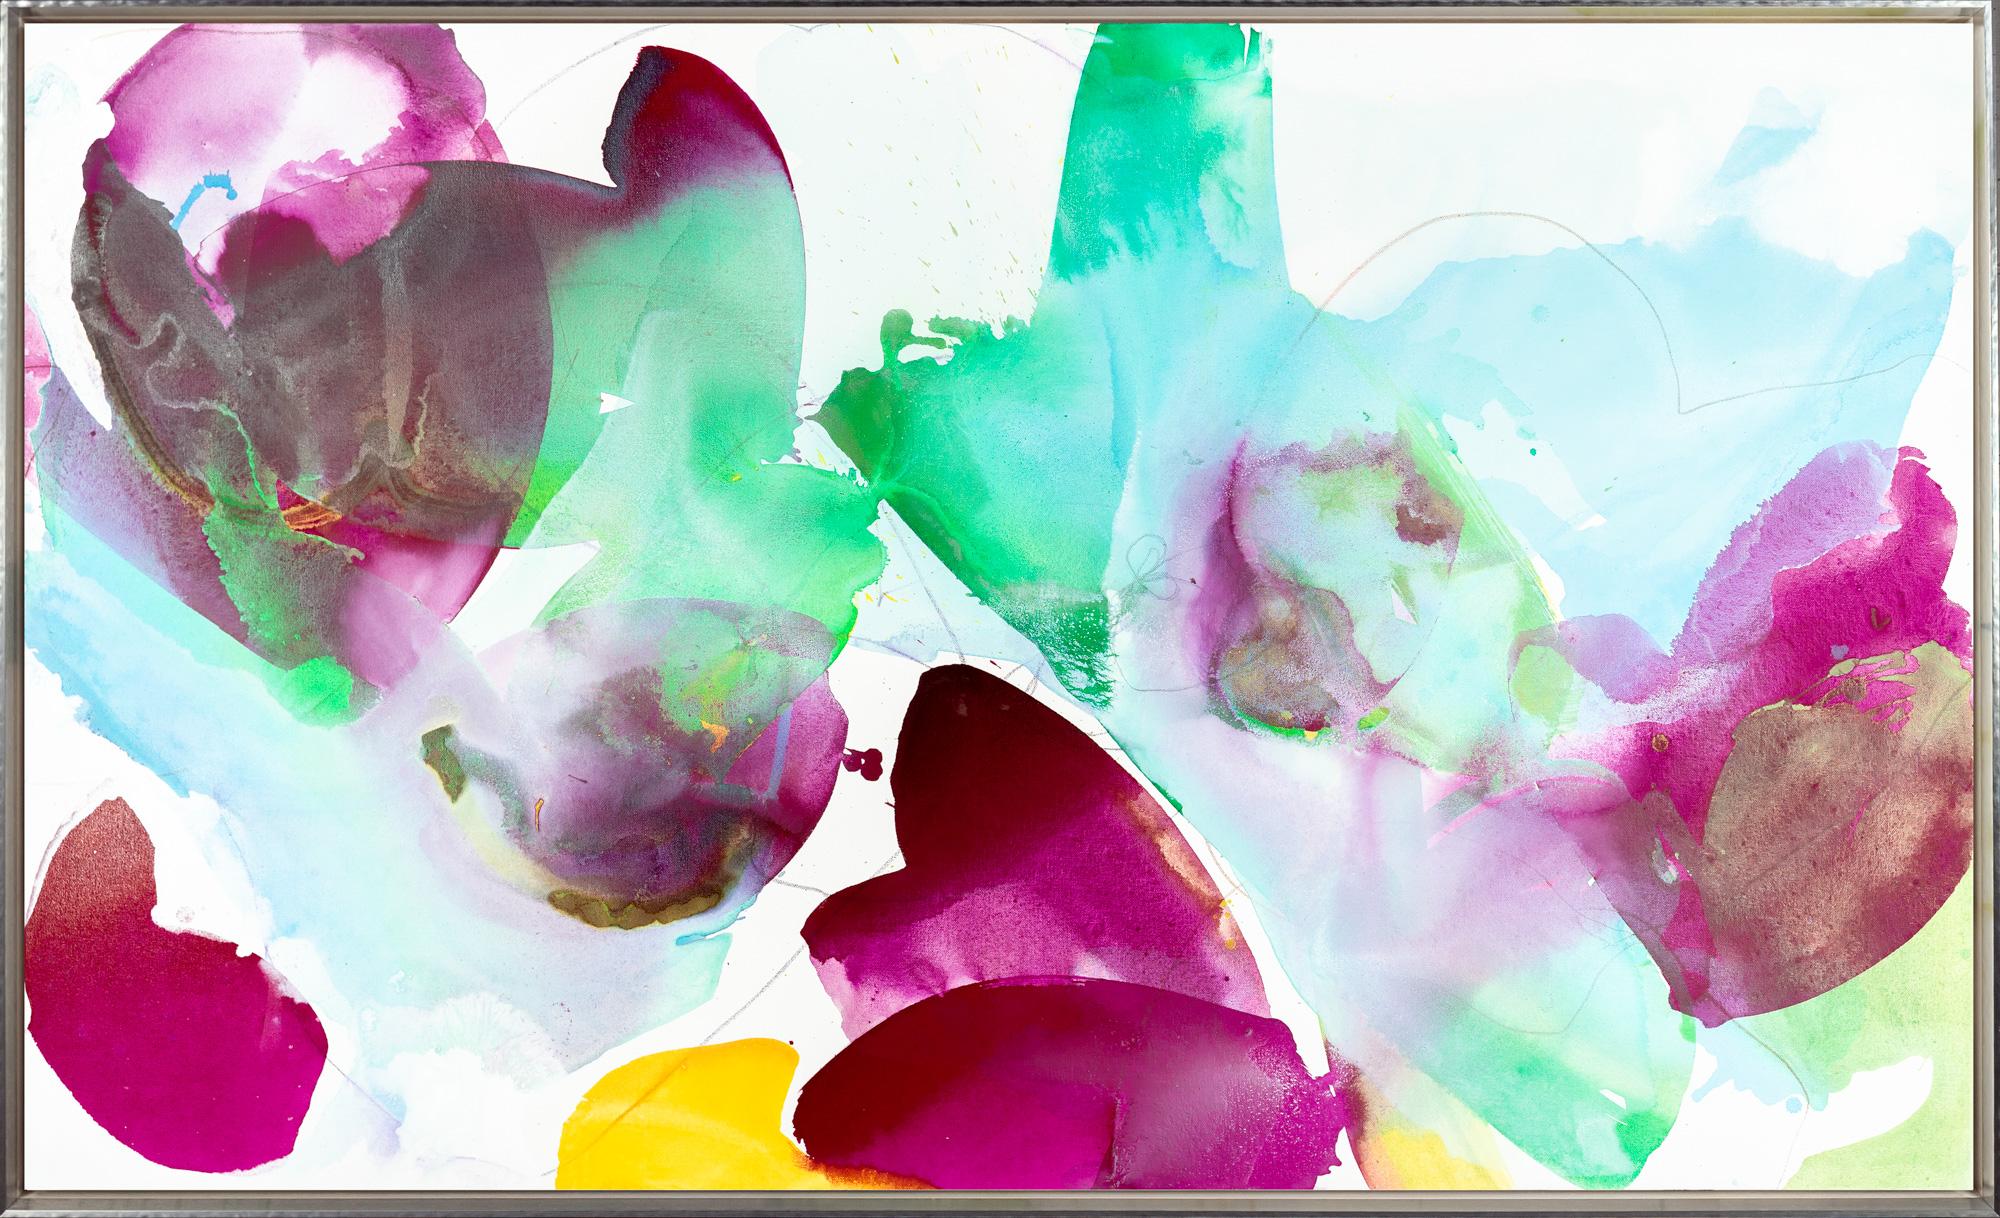 "Spring Tulips 3" Peinture contemporaine abstraite mixed media sur toile encadrée - Mixed Media Art de Liz Barber